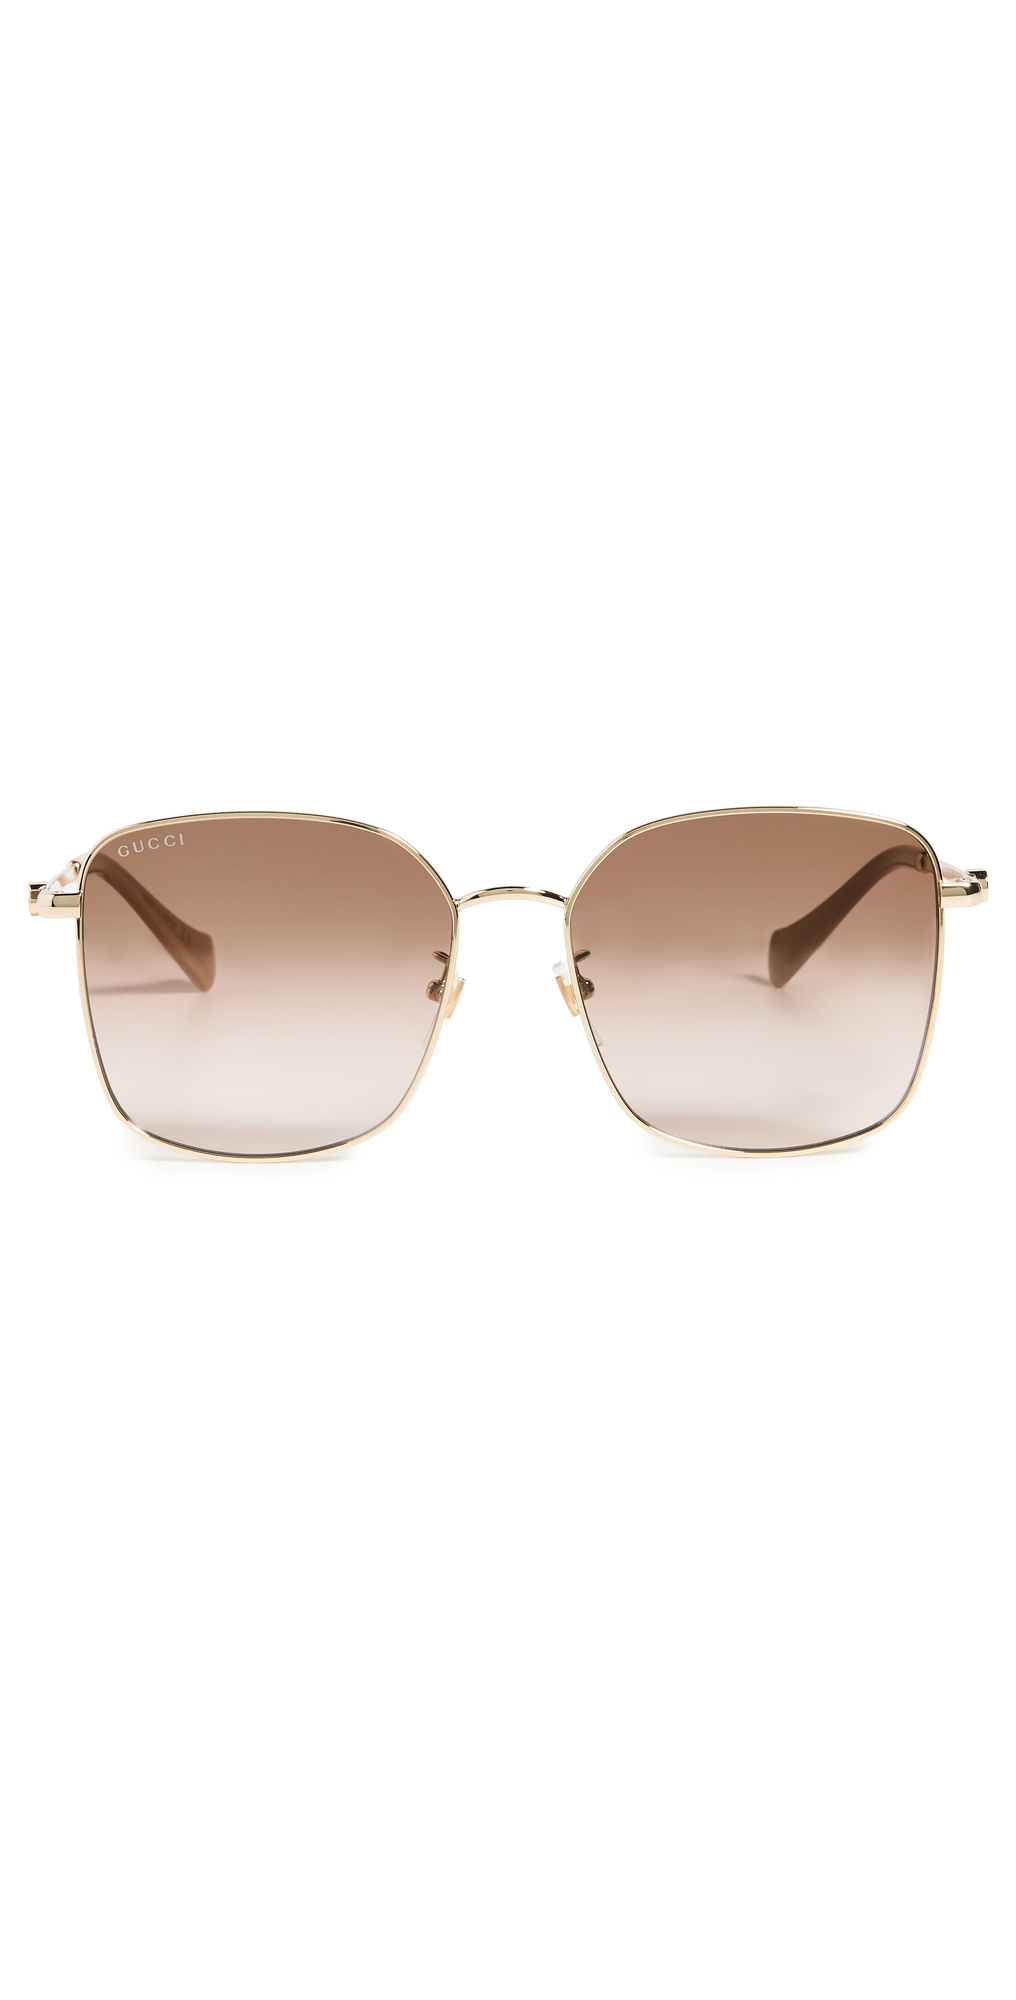 Gucci Mini Running Metal Squared Sunglasses in brown / gold